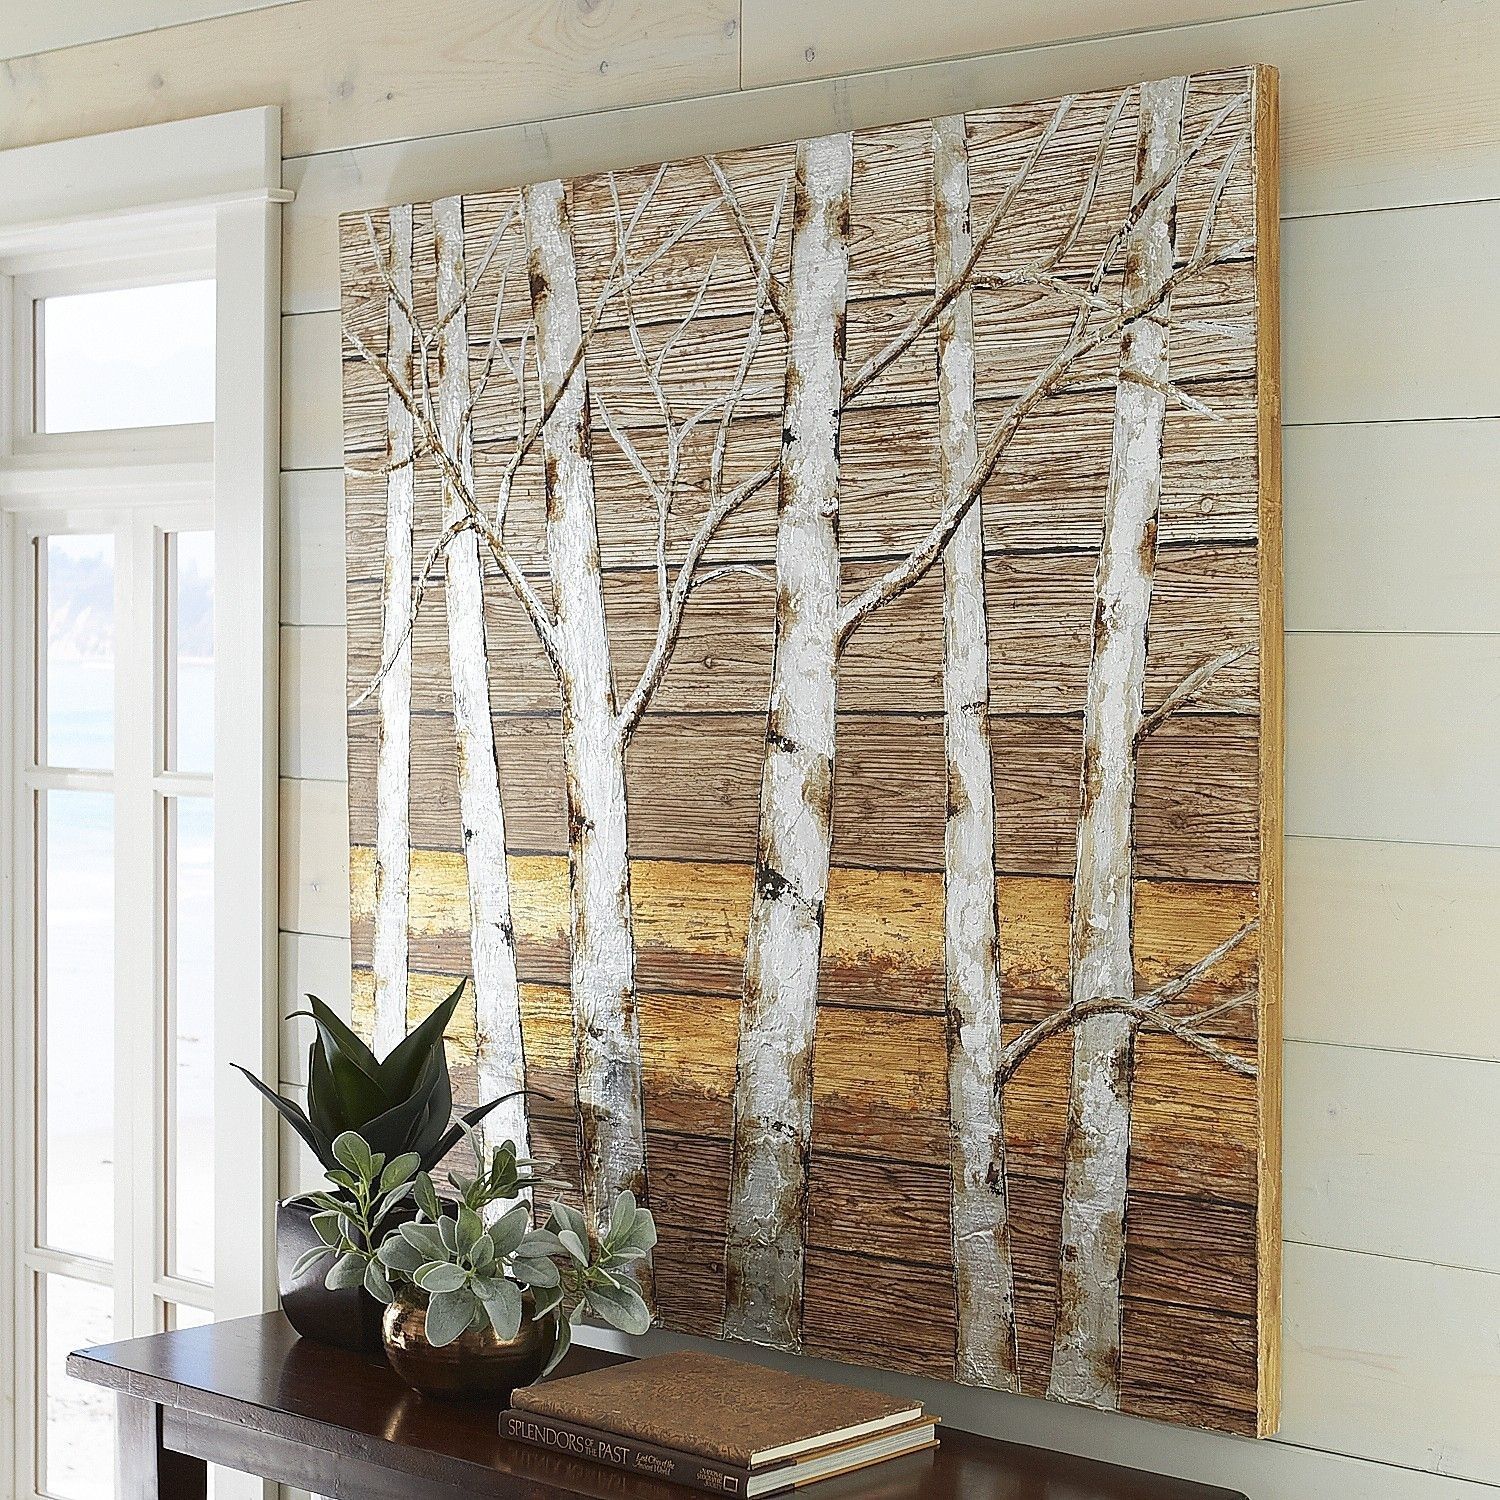 Metallic Birch Trees Wall Art – 4x4 | Products | Pinterest | Tree Regarding Birch Tree Wall Art (Photo 4 of 20)